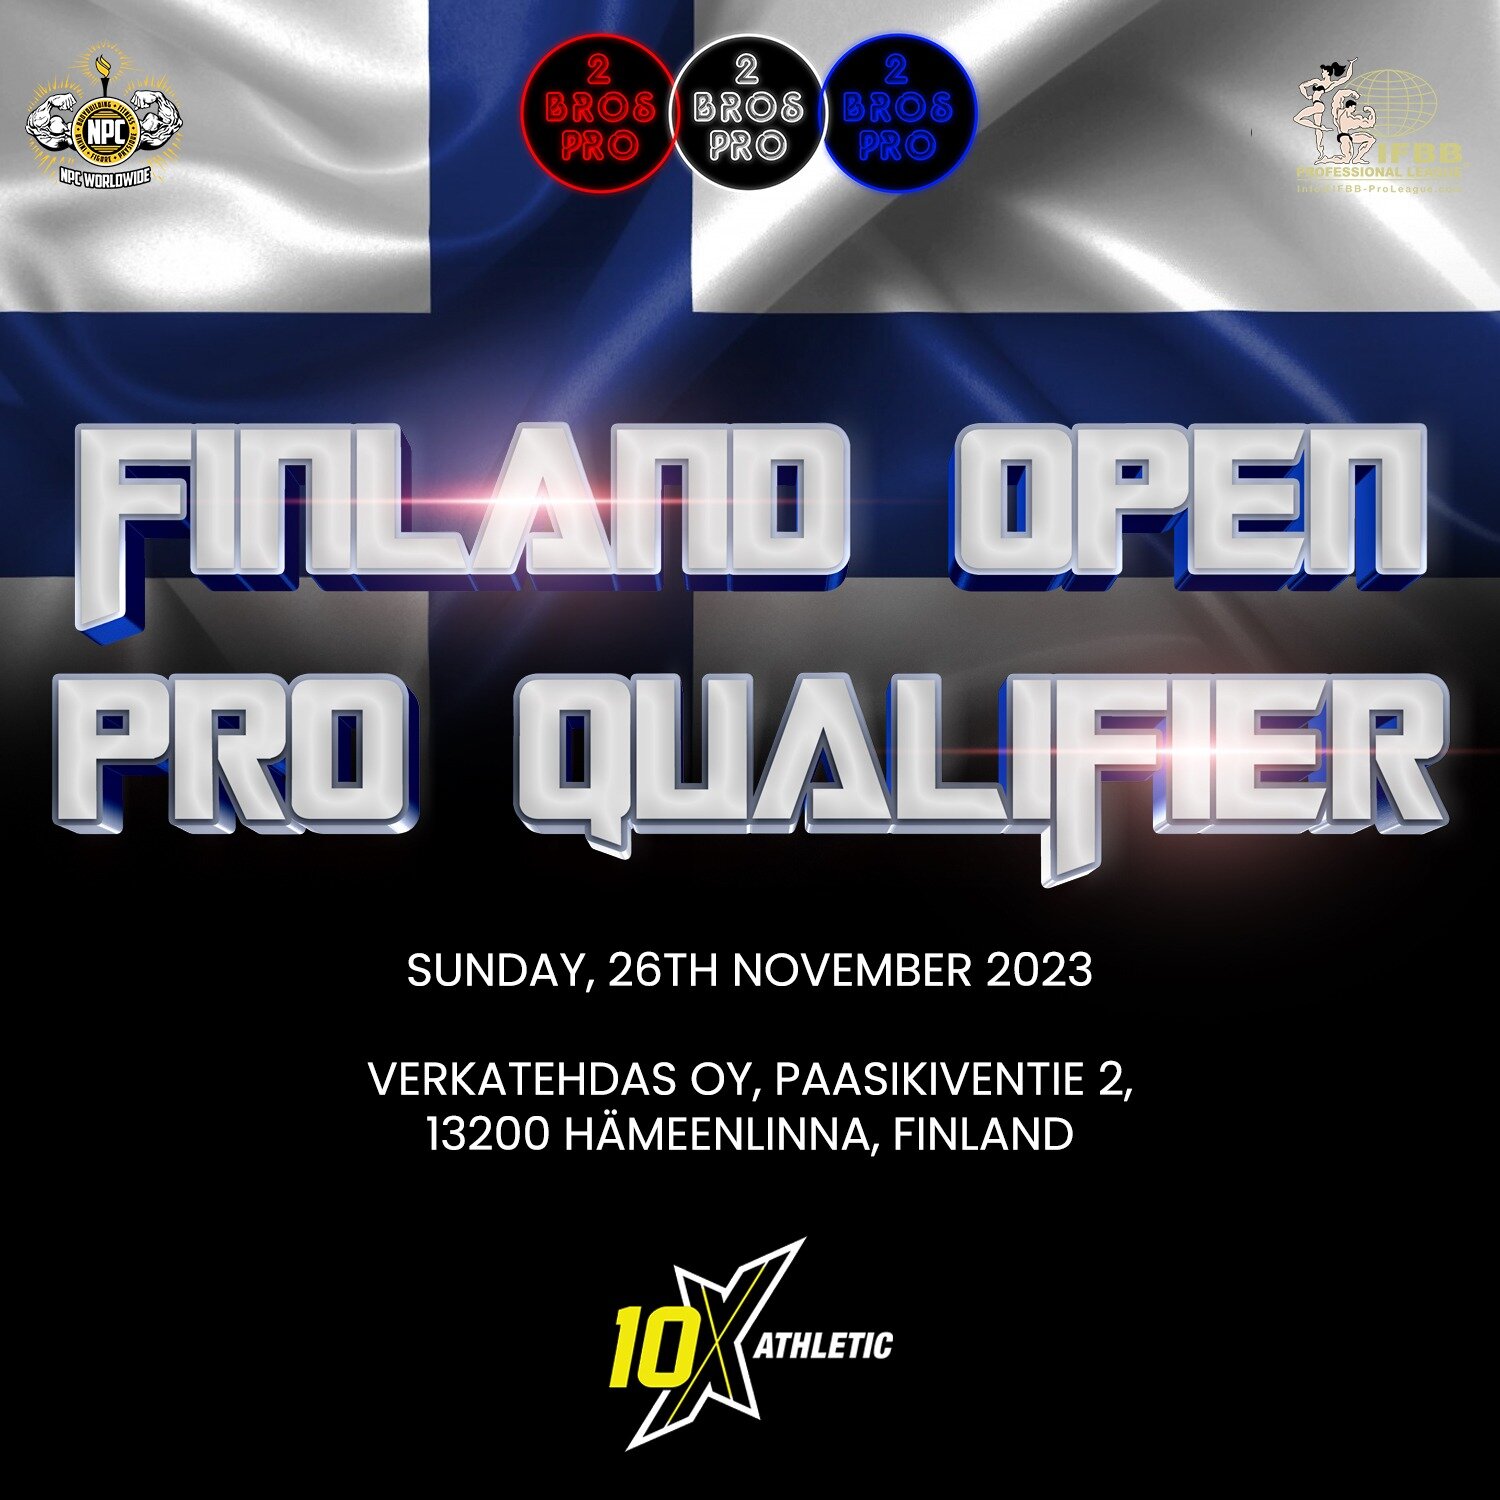 NPC Finland Open Pro Qualifier (FI)